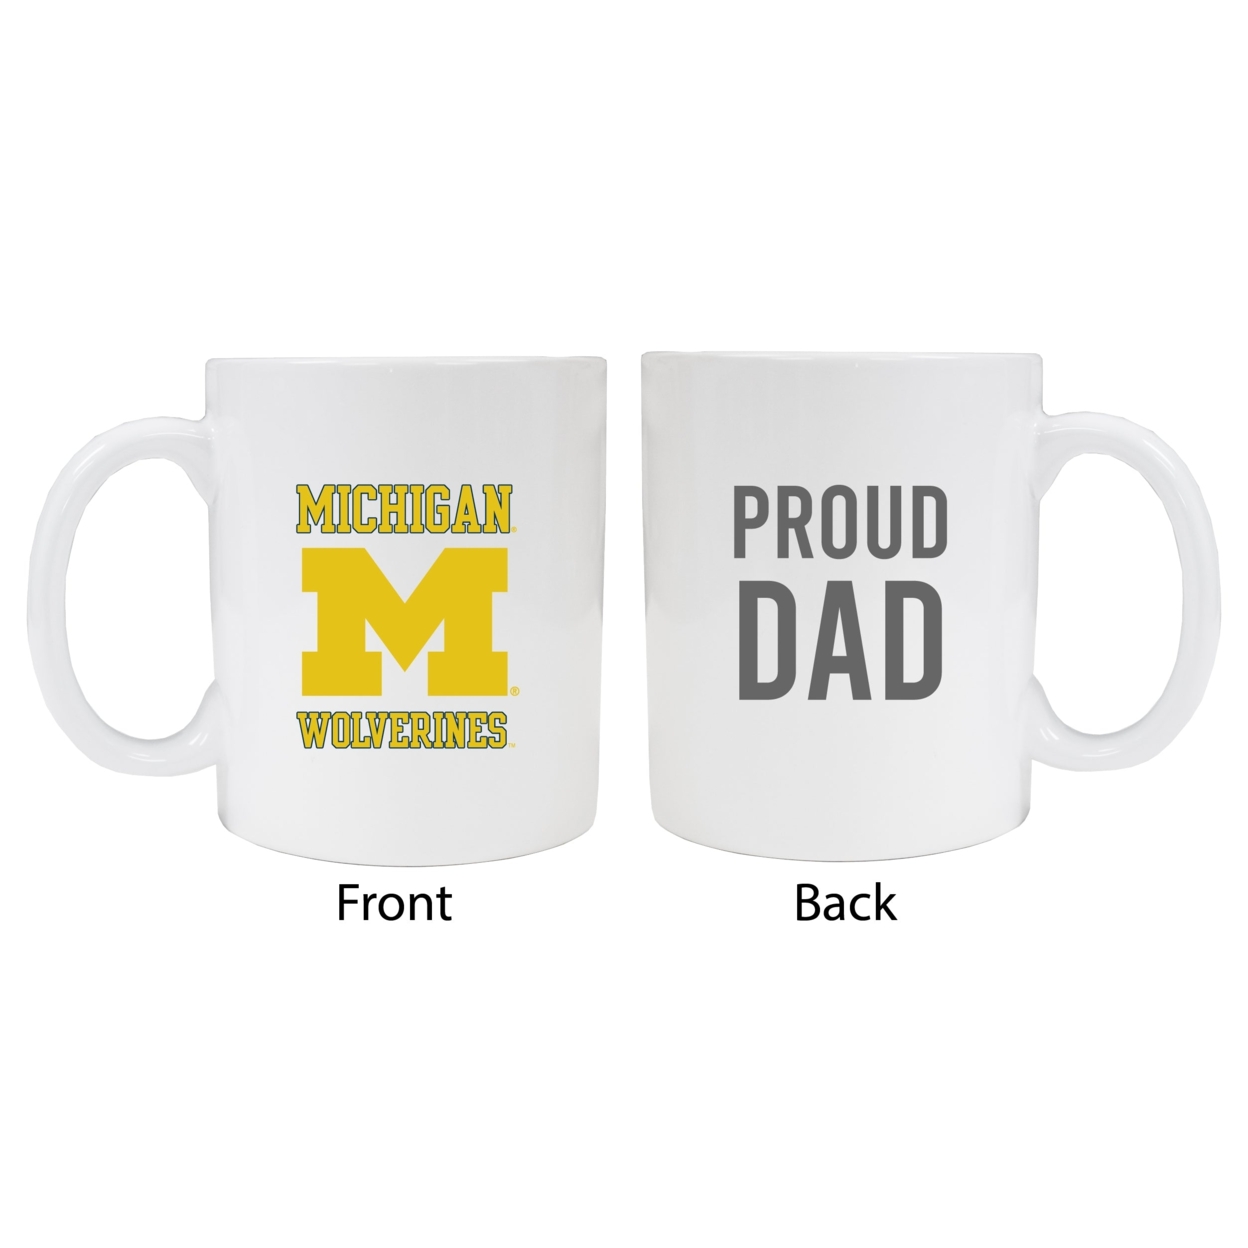 Michigan Wolverines Proud Dad Ceramic Coffee Mug - White (2 Pack)